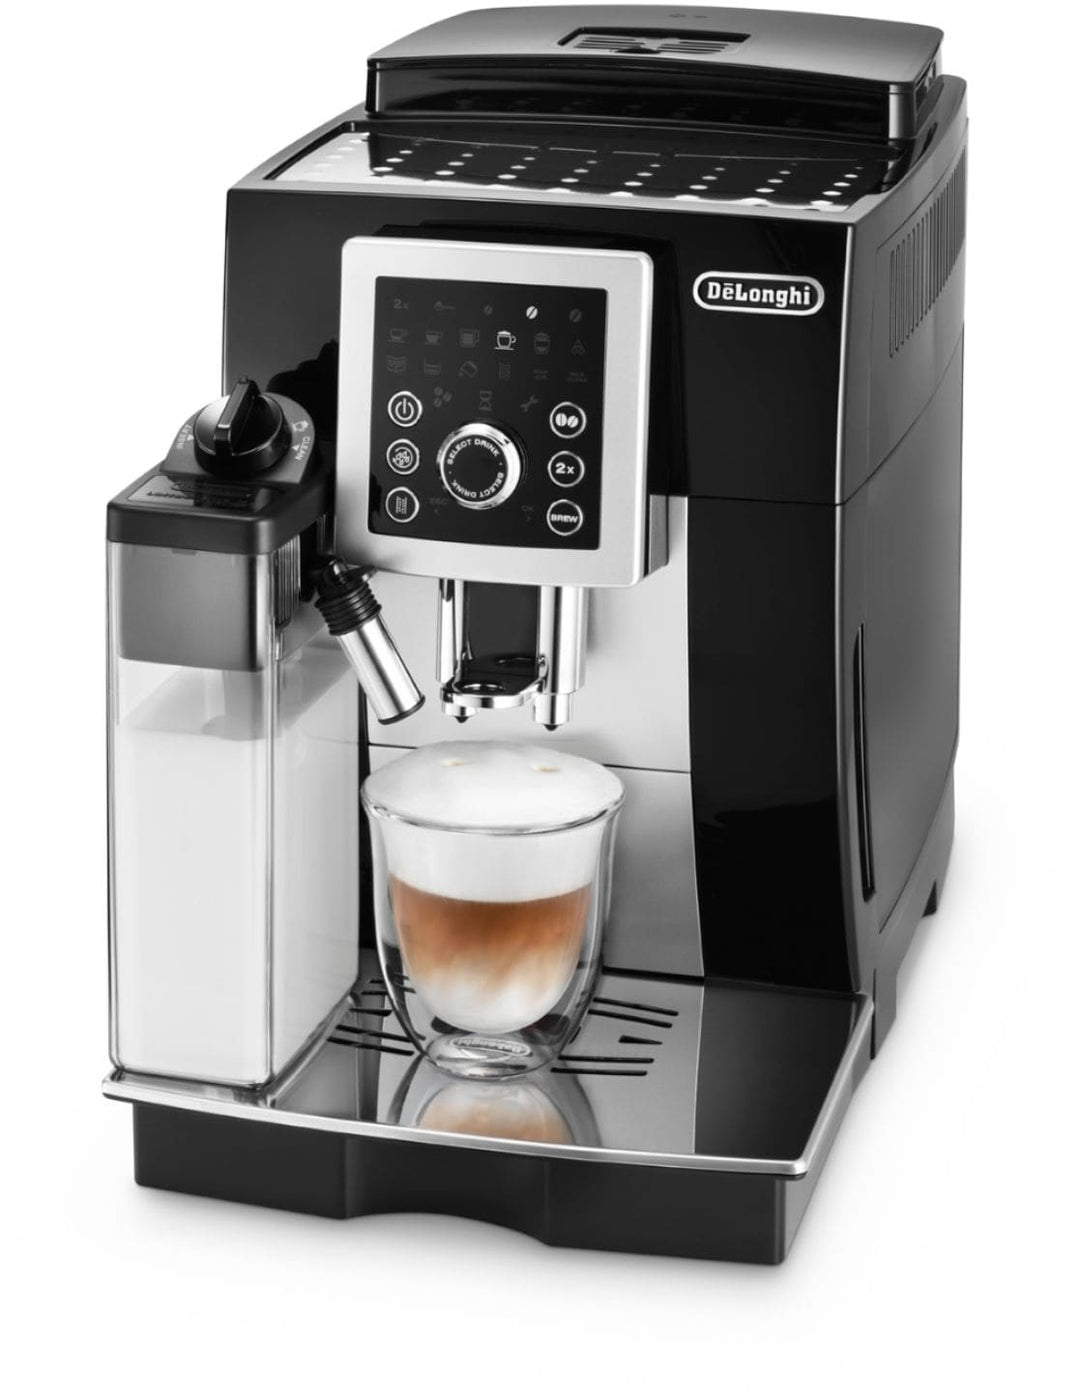 De'Longhi - Magnifica S Espresso Machine with 15 bars of pressure and intergrated grinder - Silver/Black_6